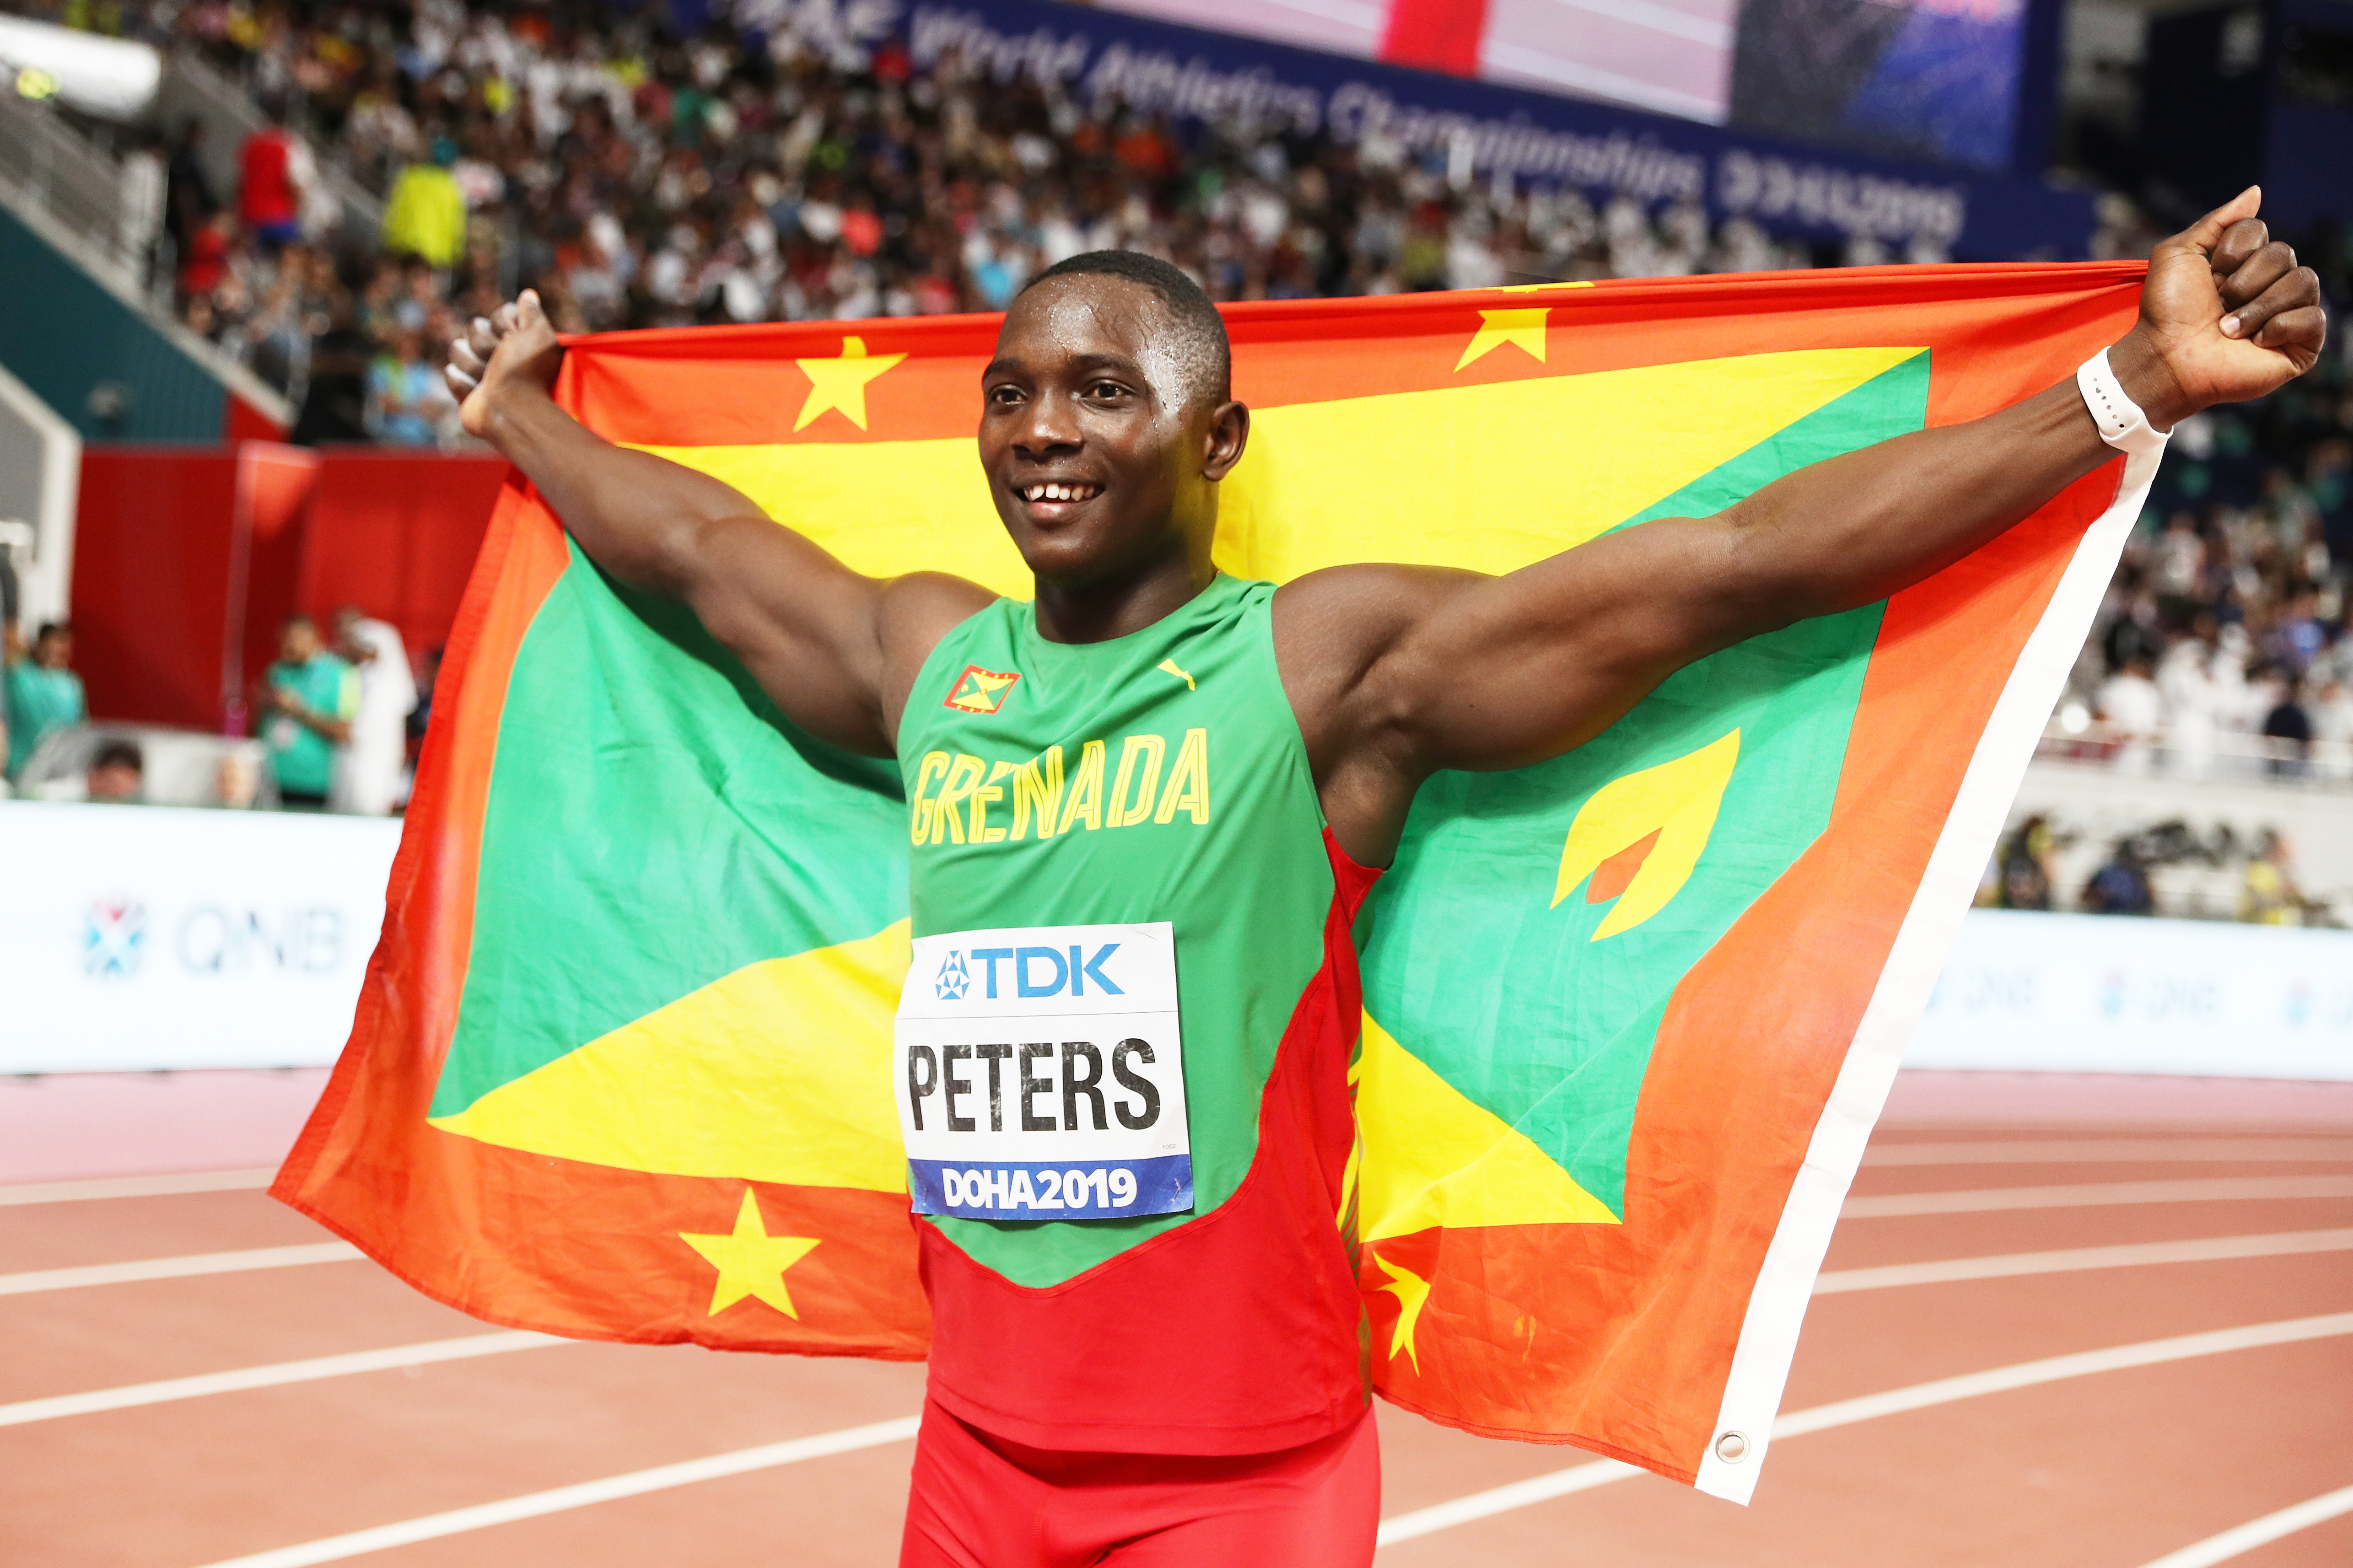 World champion Peters turns pro